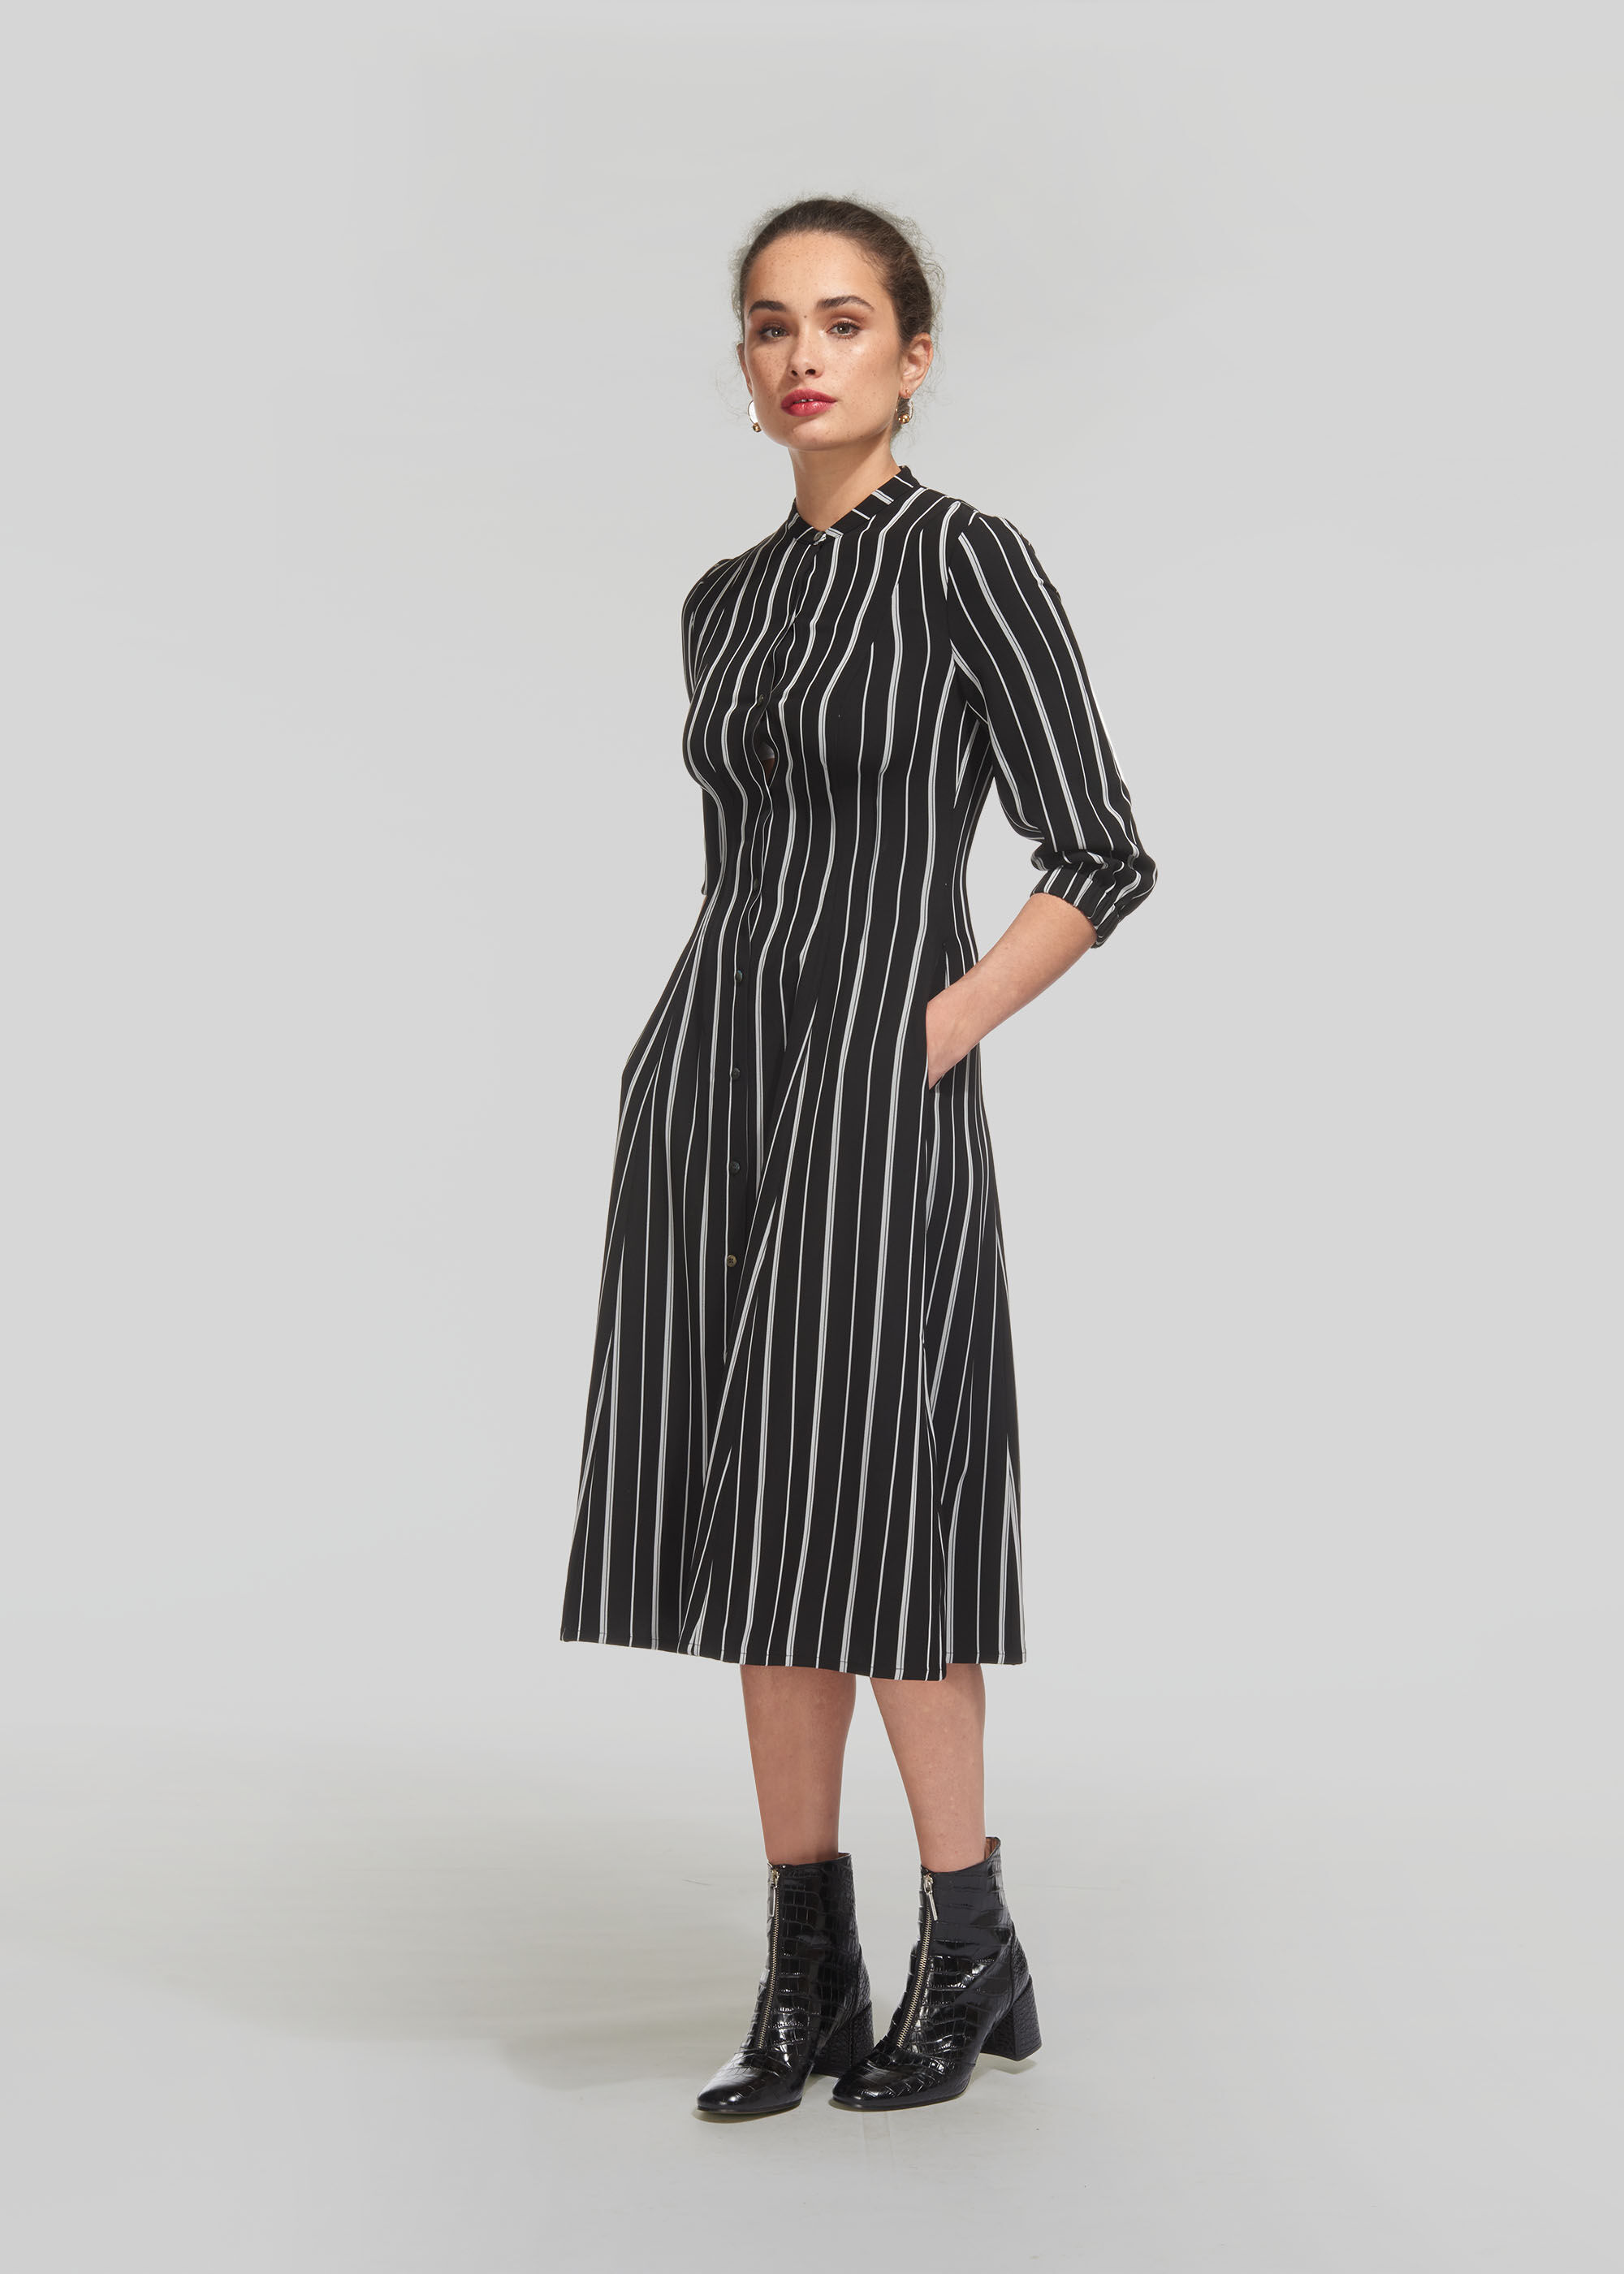 black and white striped shirt dress